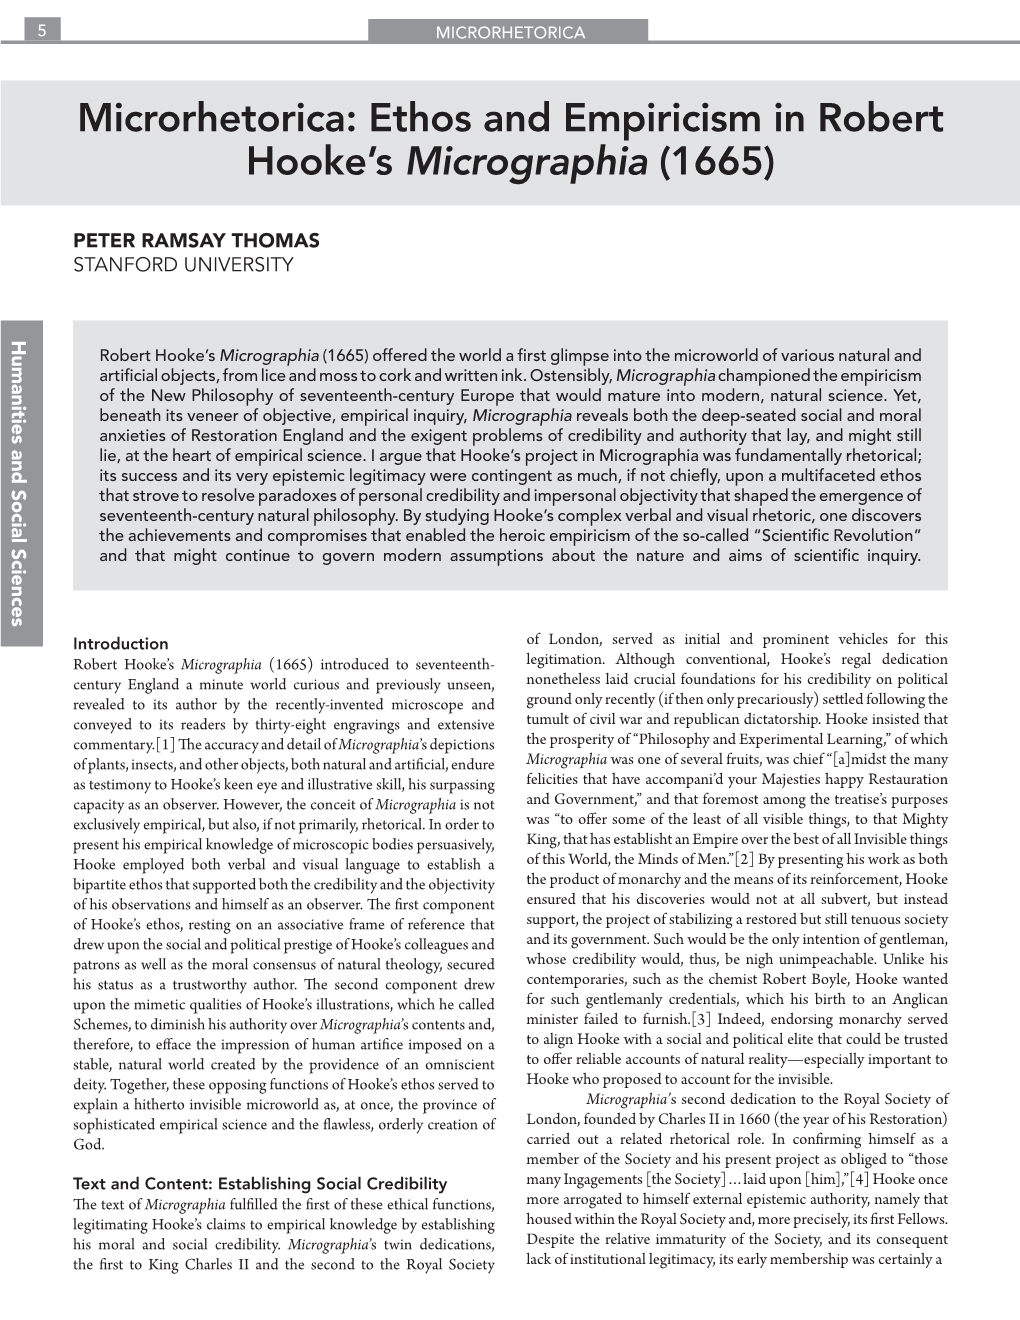 Microrhetorica: Ethos and Empiricism in Robert Hooke's Micrographia